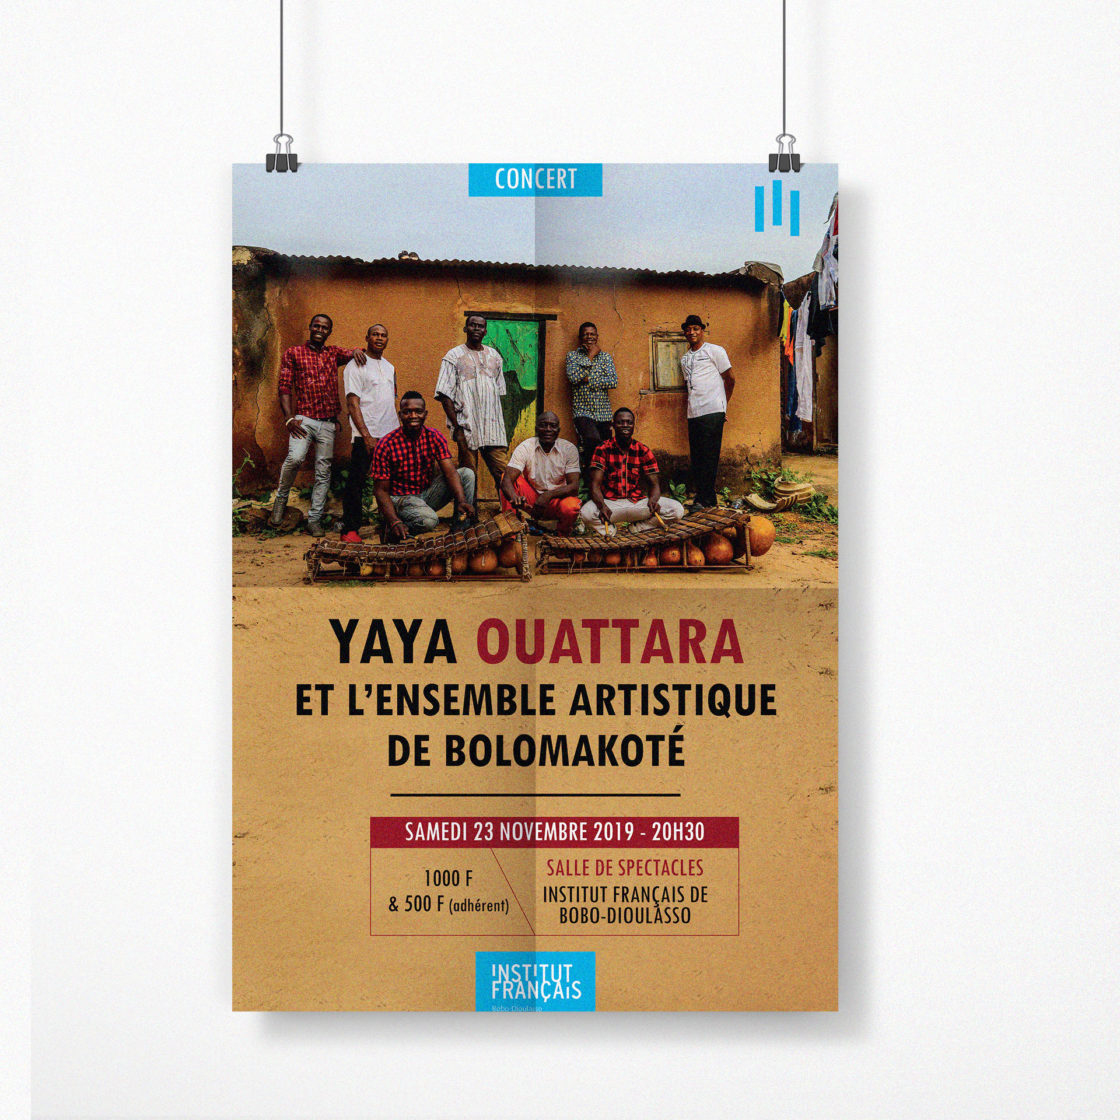 yaya-ouattara-institut-francais-bobo-dioulasso-2